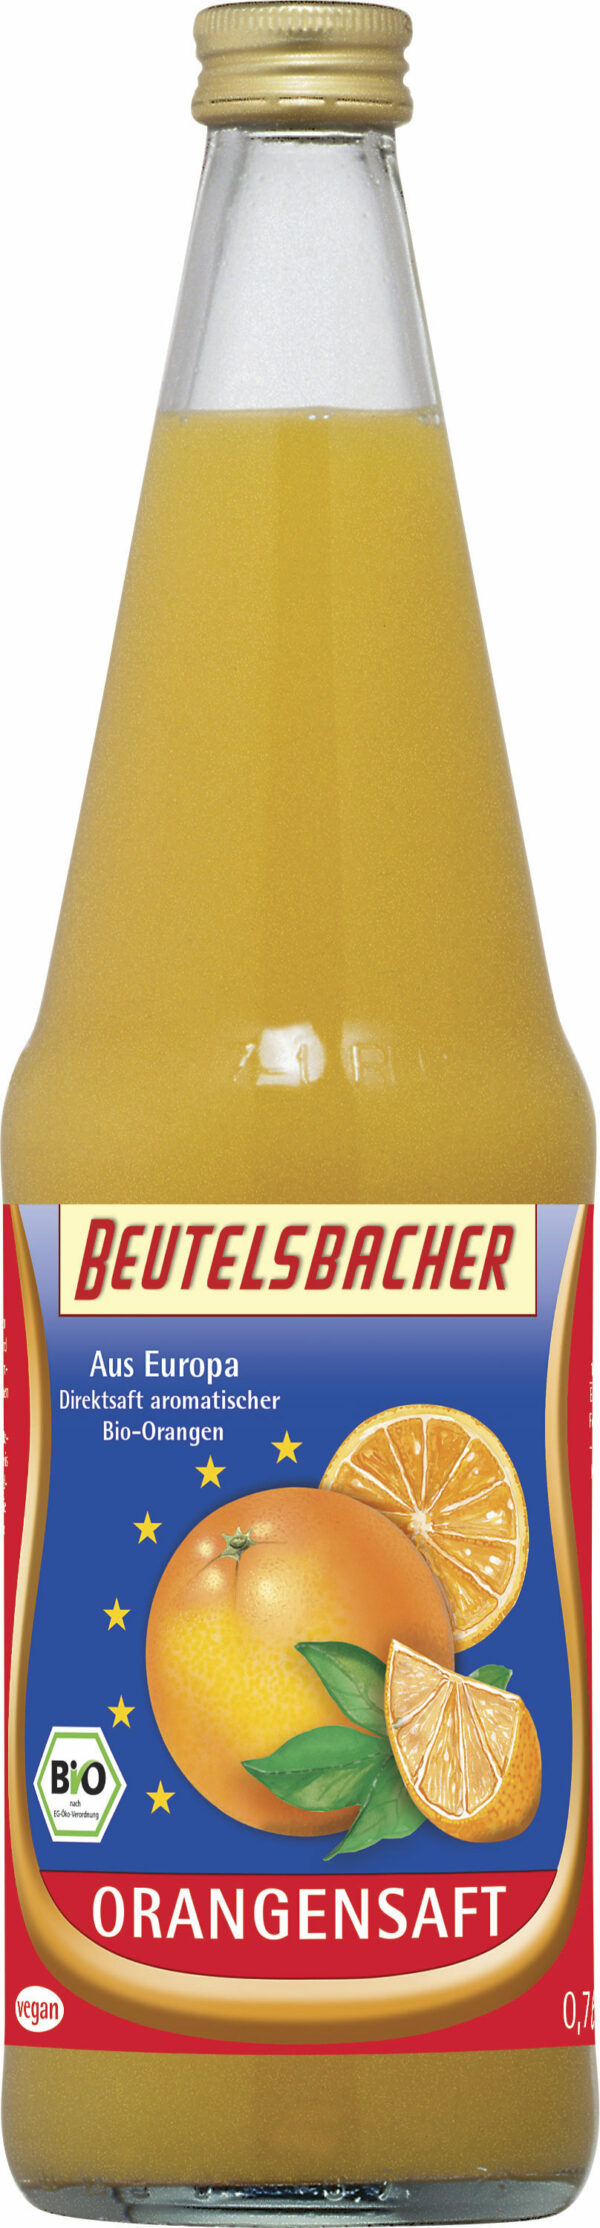 BEUTELSBACHER Bio Orangen Direktsaft Europa 6 x 0,7l